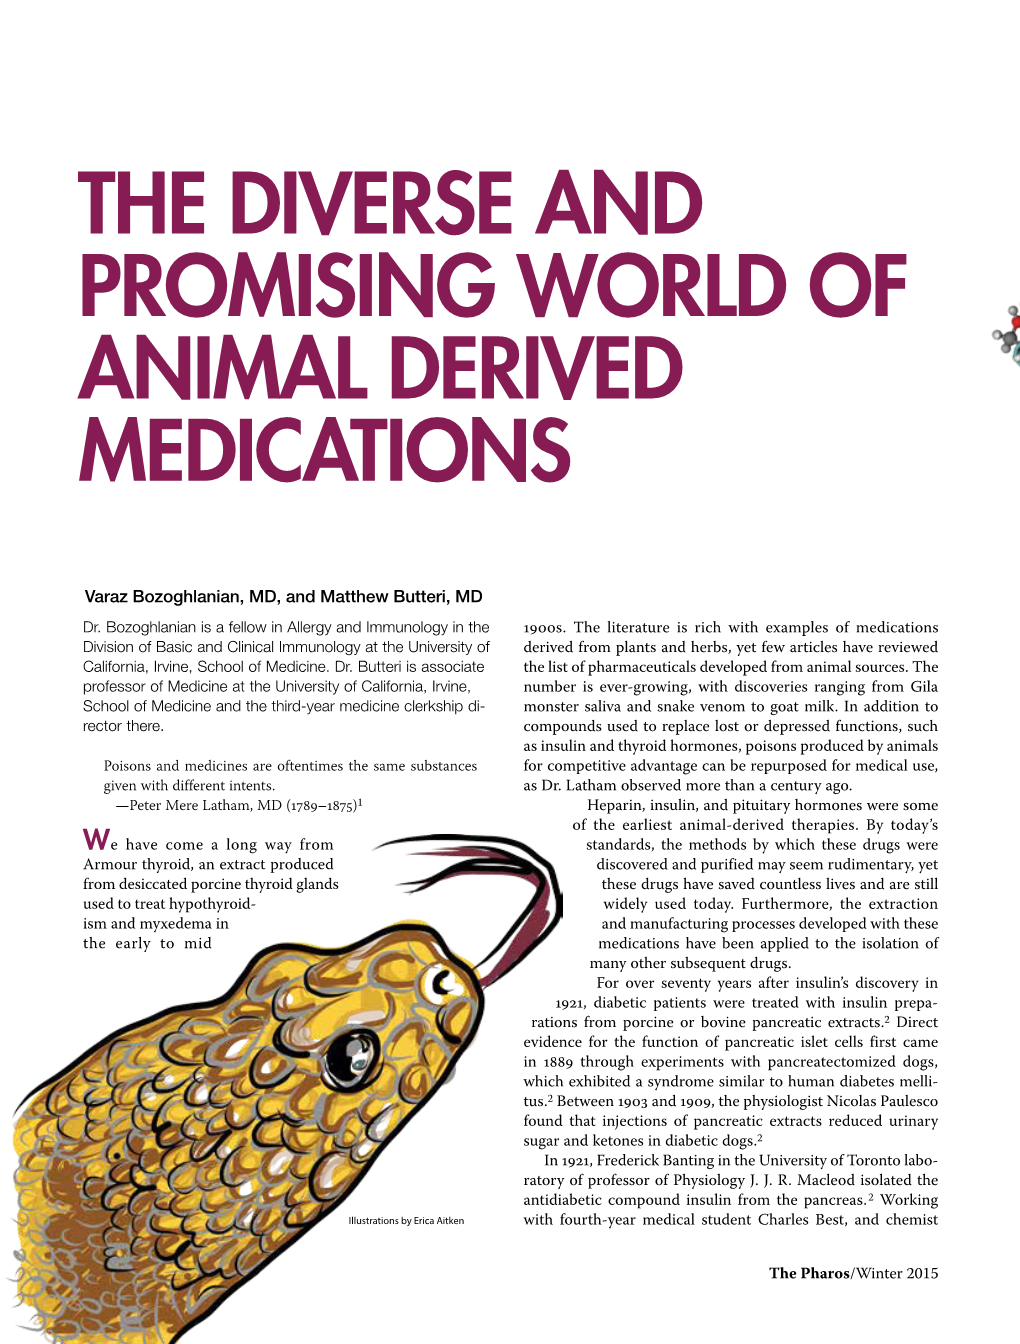 Animal-Derived Medications